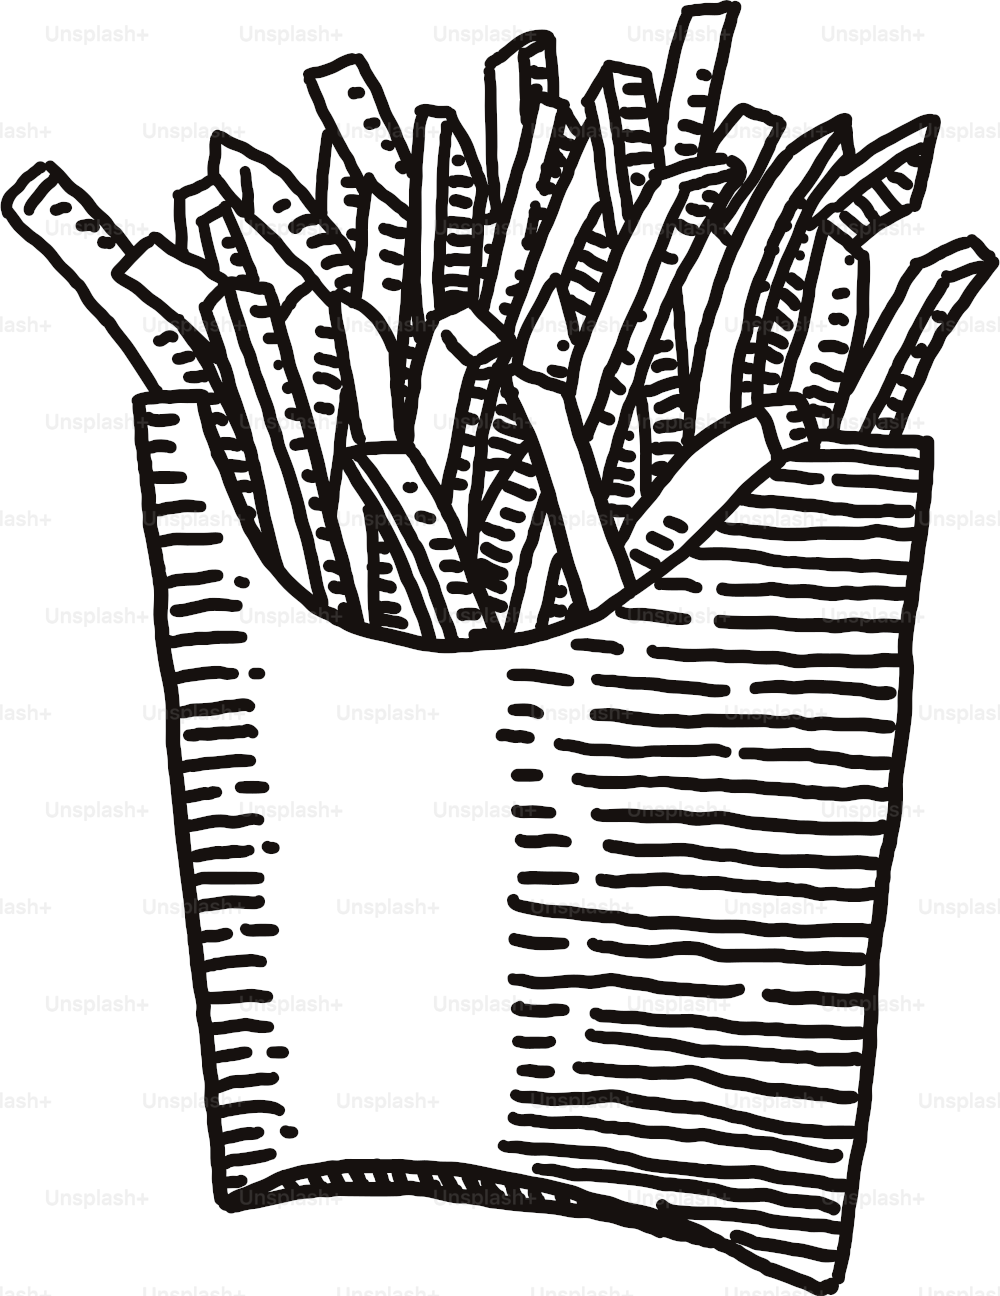 Dessin vectoriel simple d’un paquet de frites